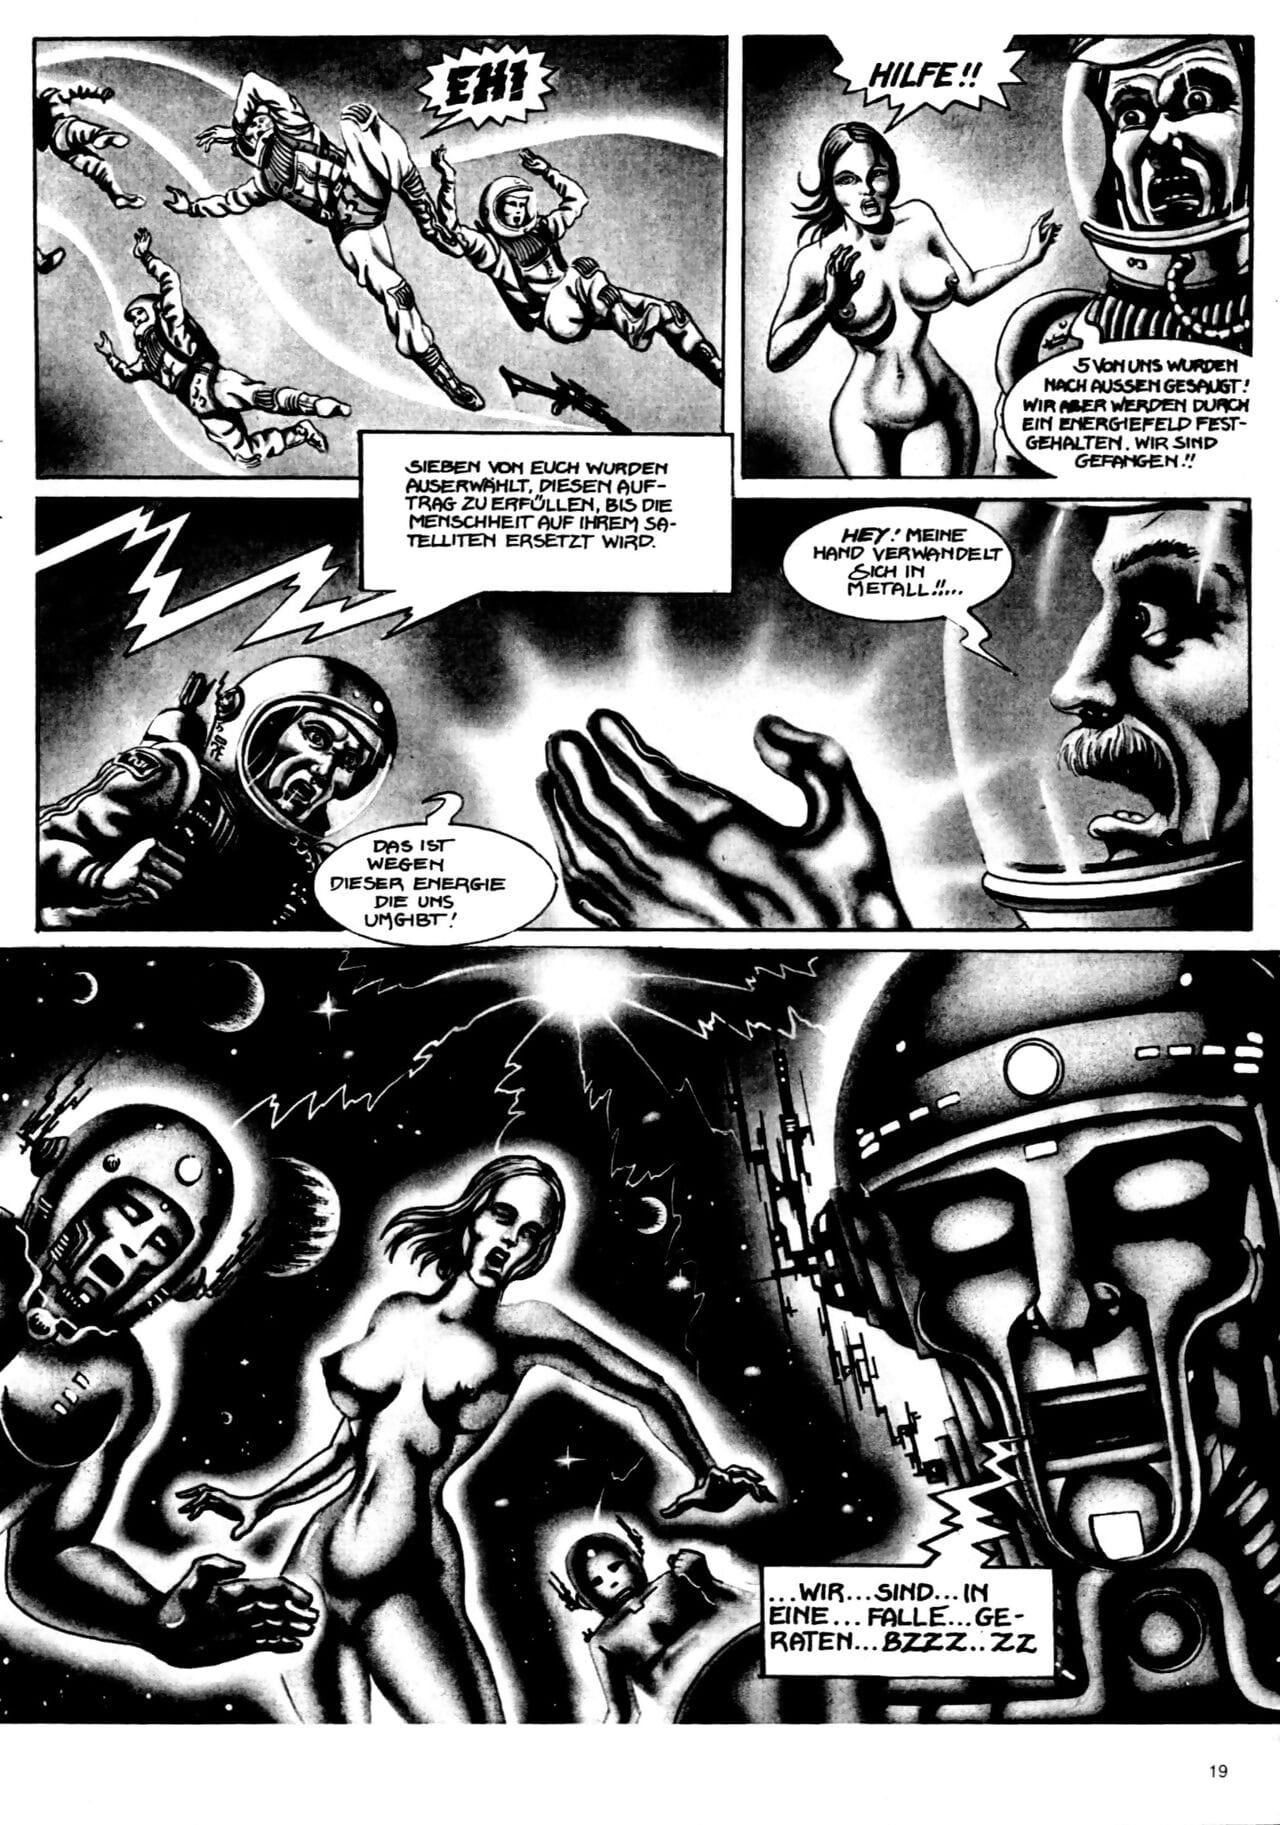 Schwermetall #006 page 1